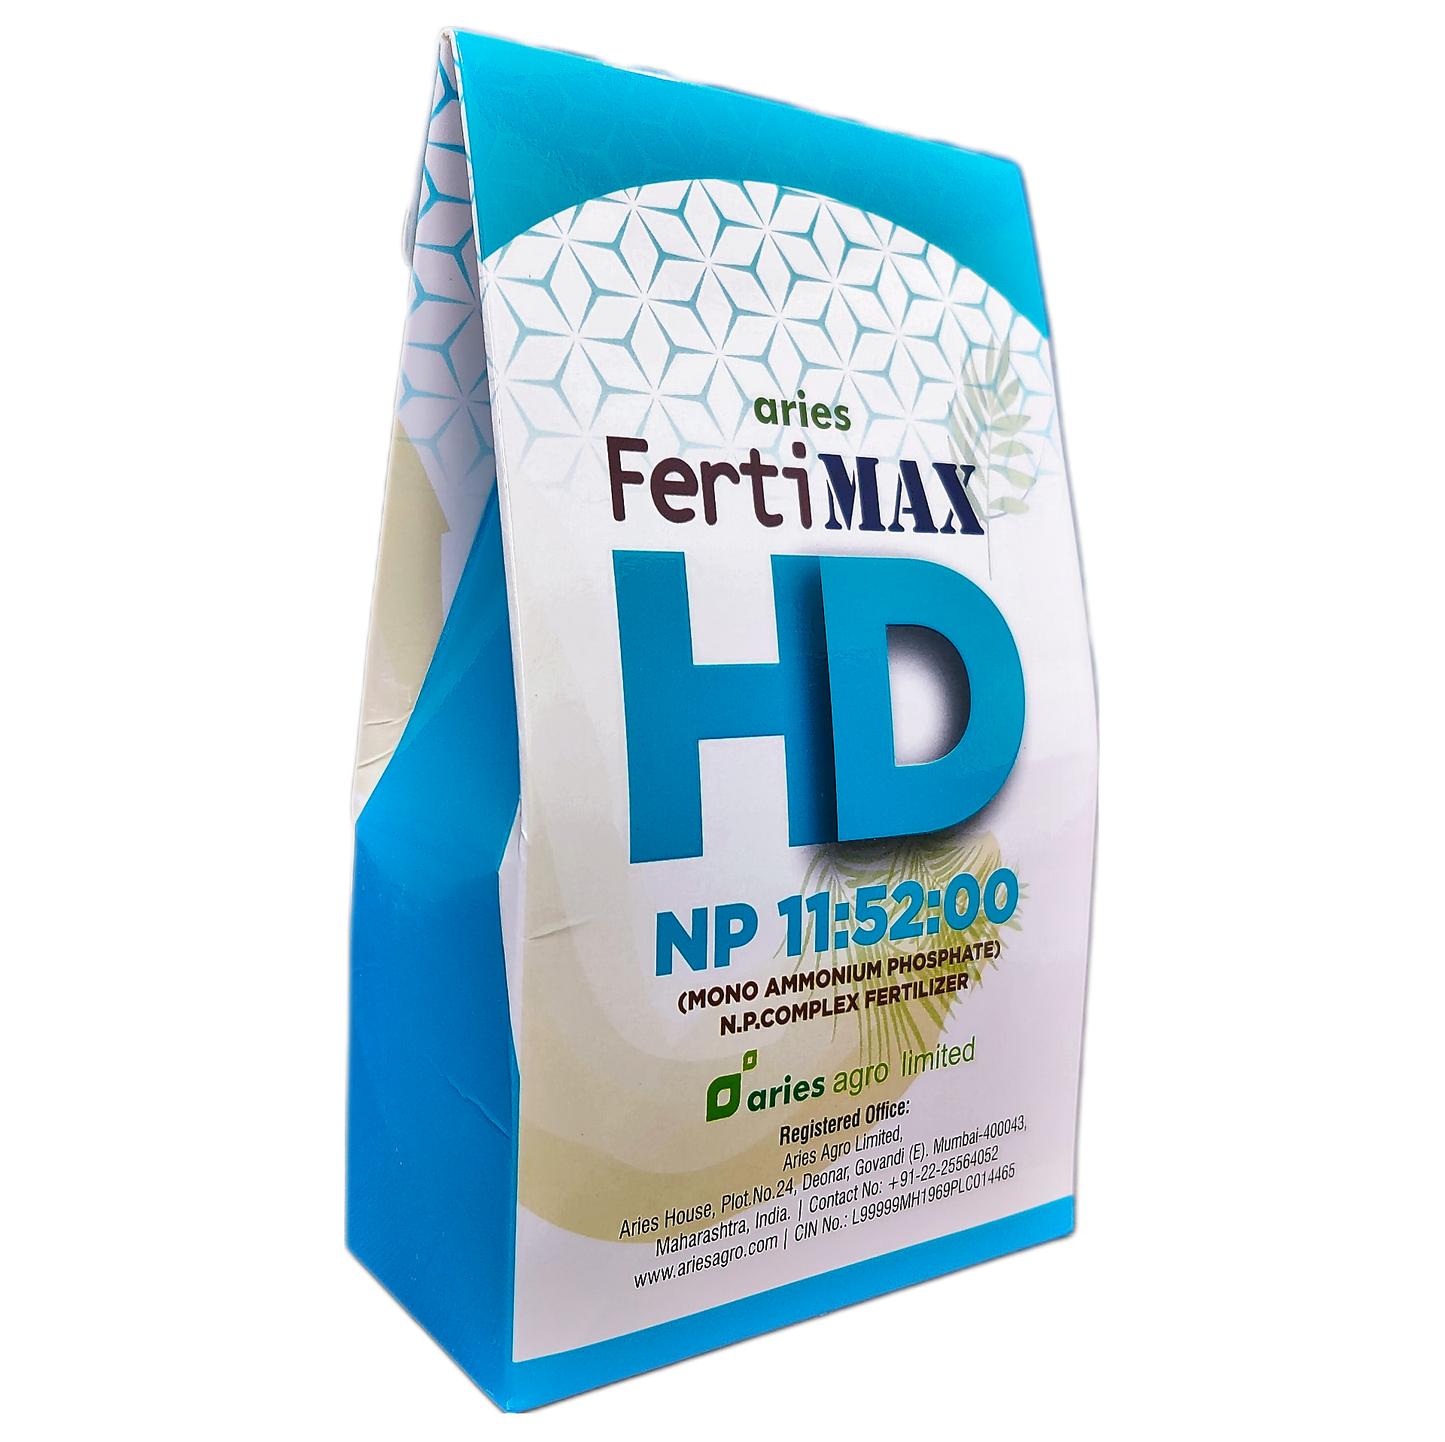 Aries FertiMax HD NPK 11:52:00 (Dose - 200gm/acre)